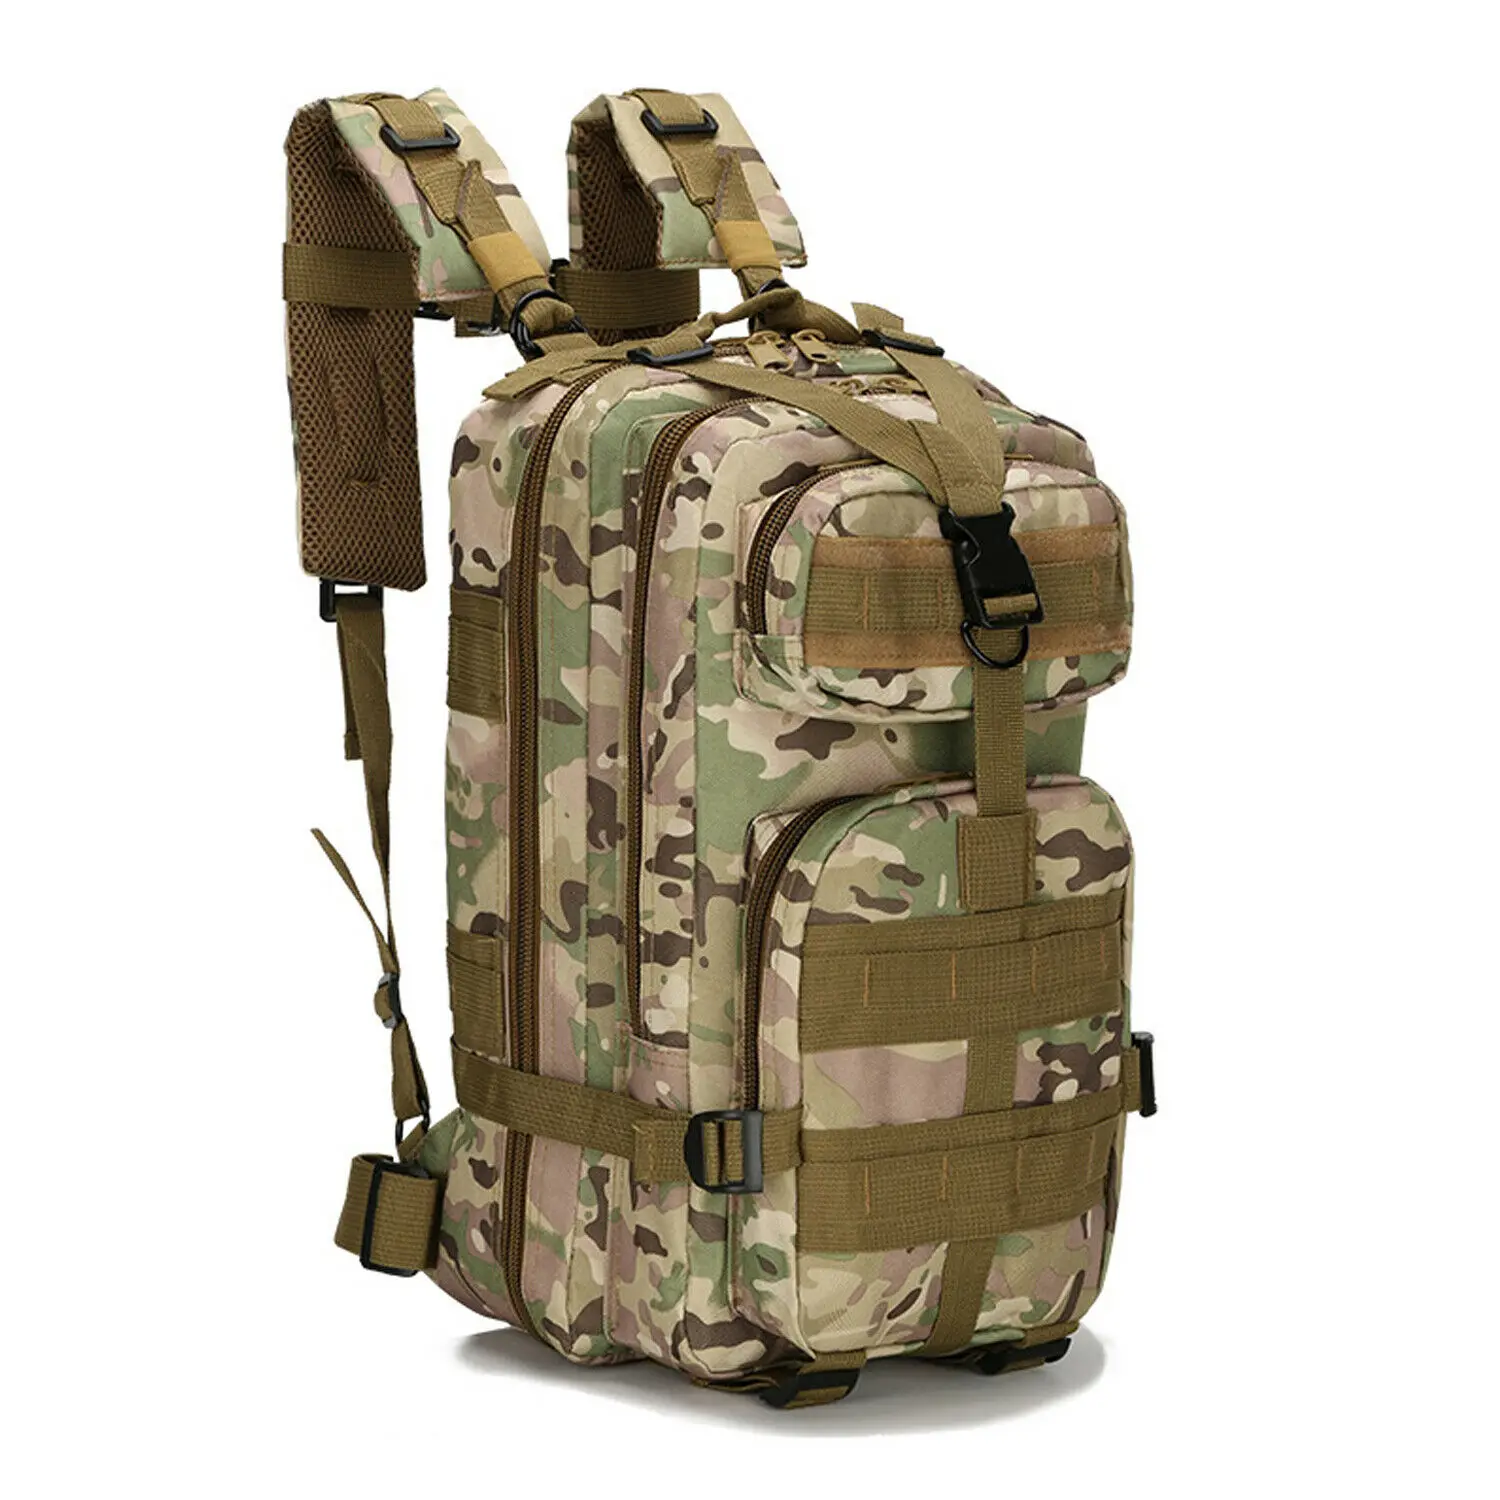 

Wholesale 25L Outdoor Tactical Camping Hiking Shoulder Bag, As showed